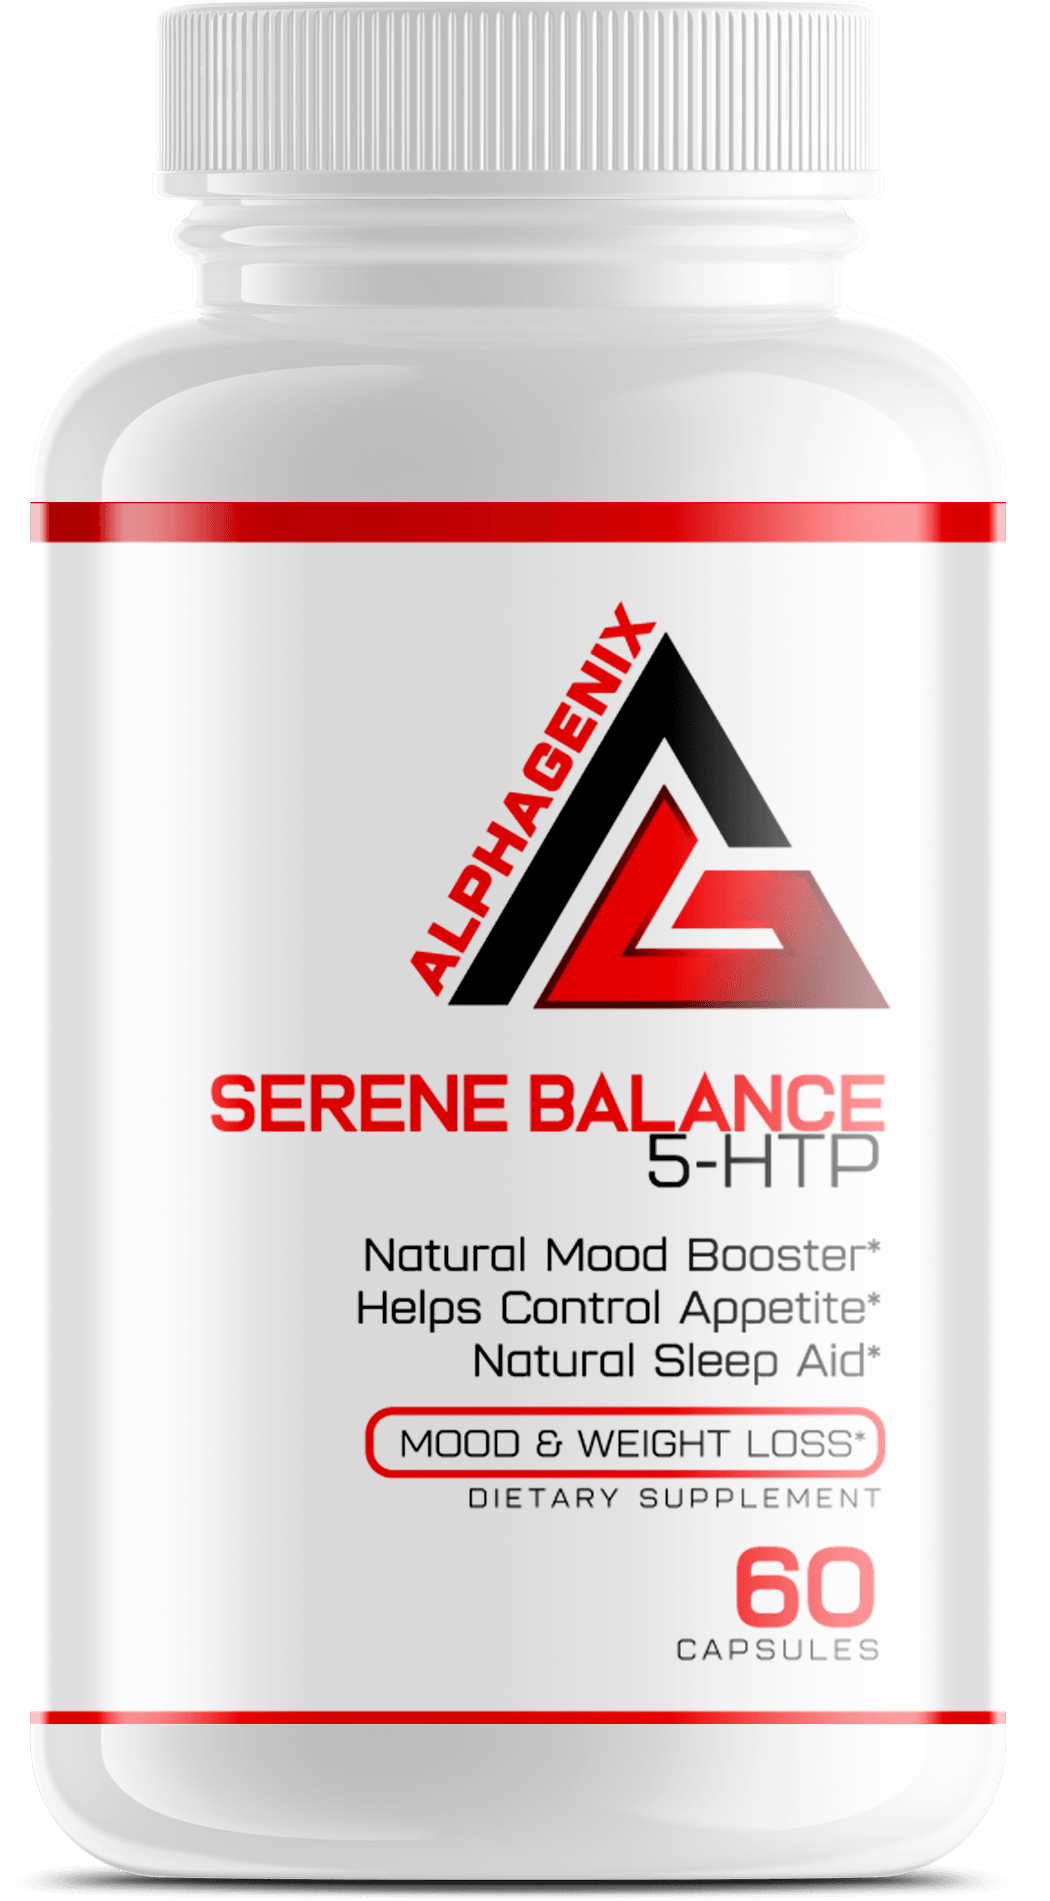 SereneBalance - 5-HTP Supports Mood, Appetite, & Natural Sleep - AlphaGenix